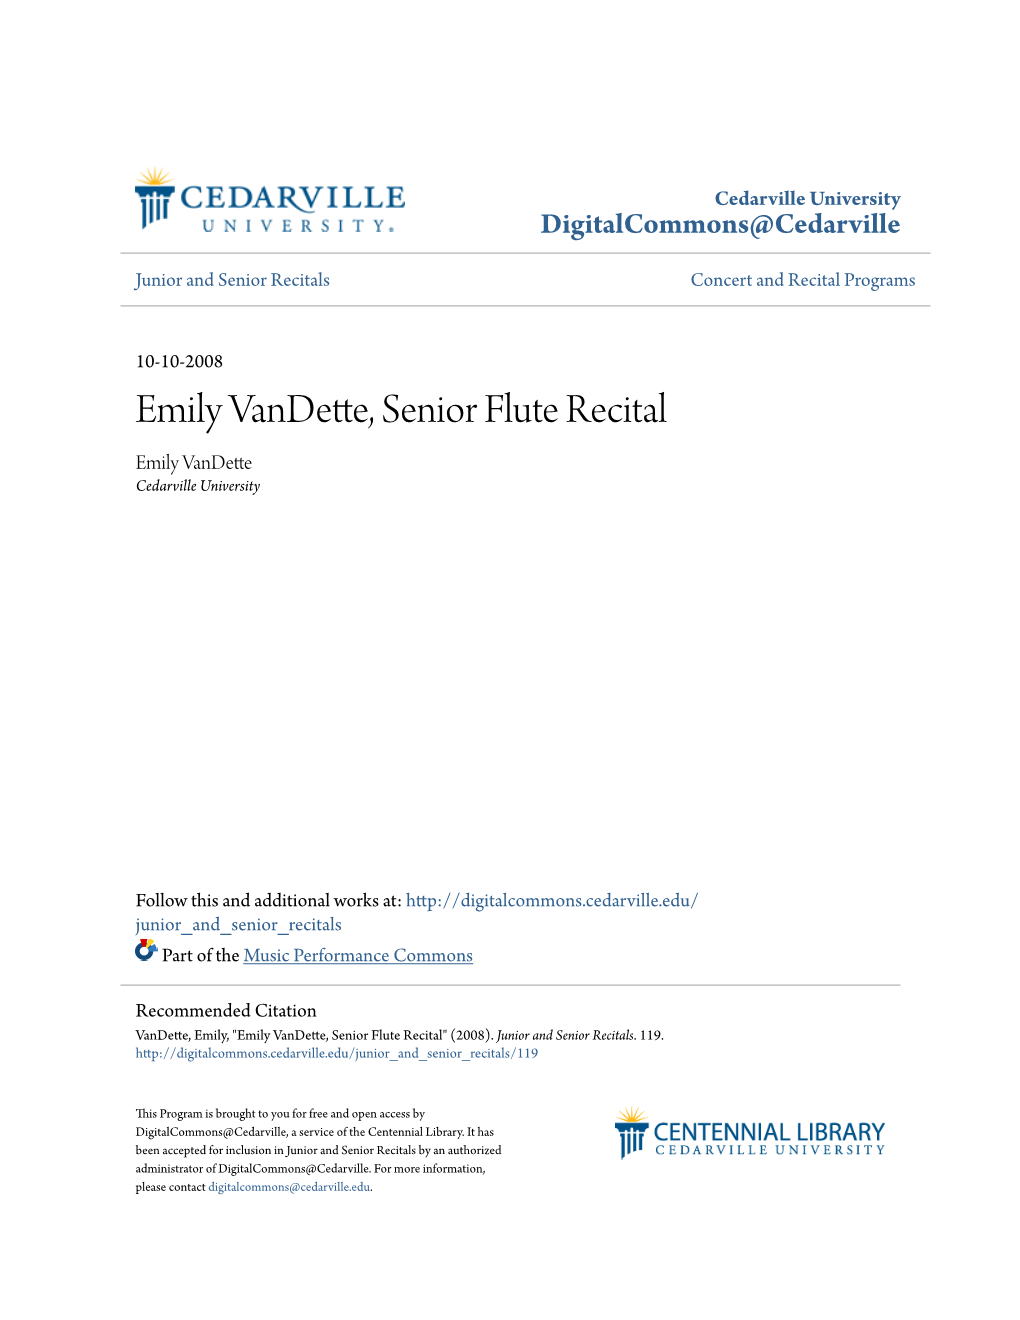 Emily Vandette, Senior Flute Recital Emily Vandette Cedarville University